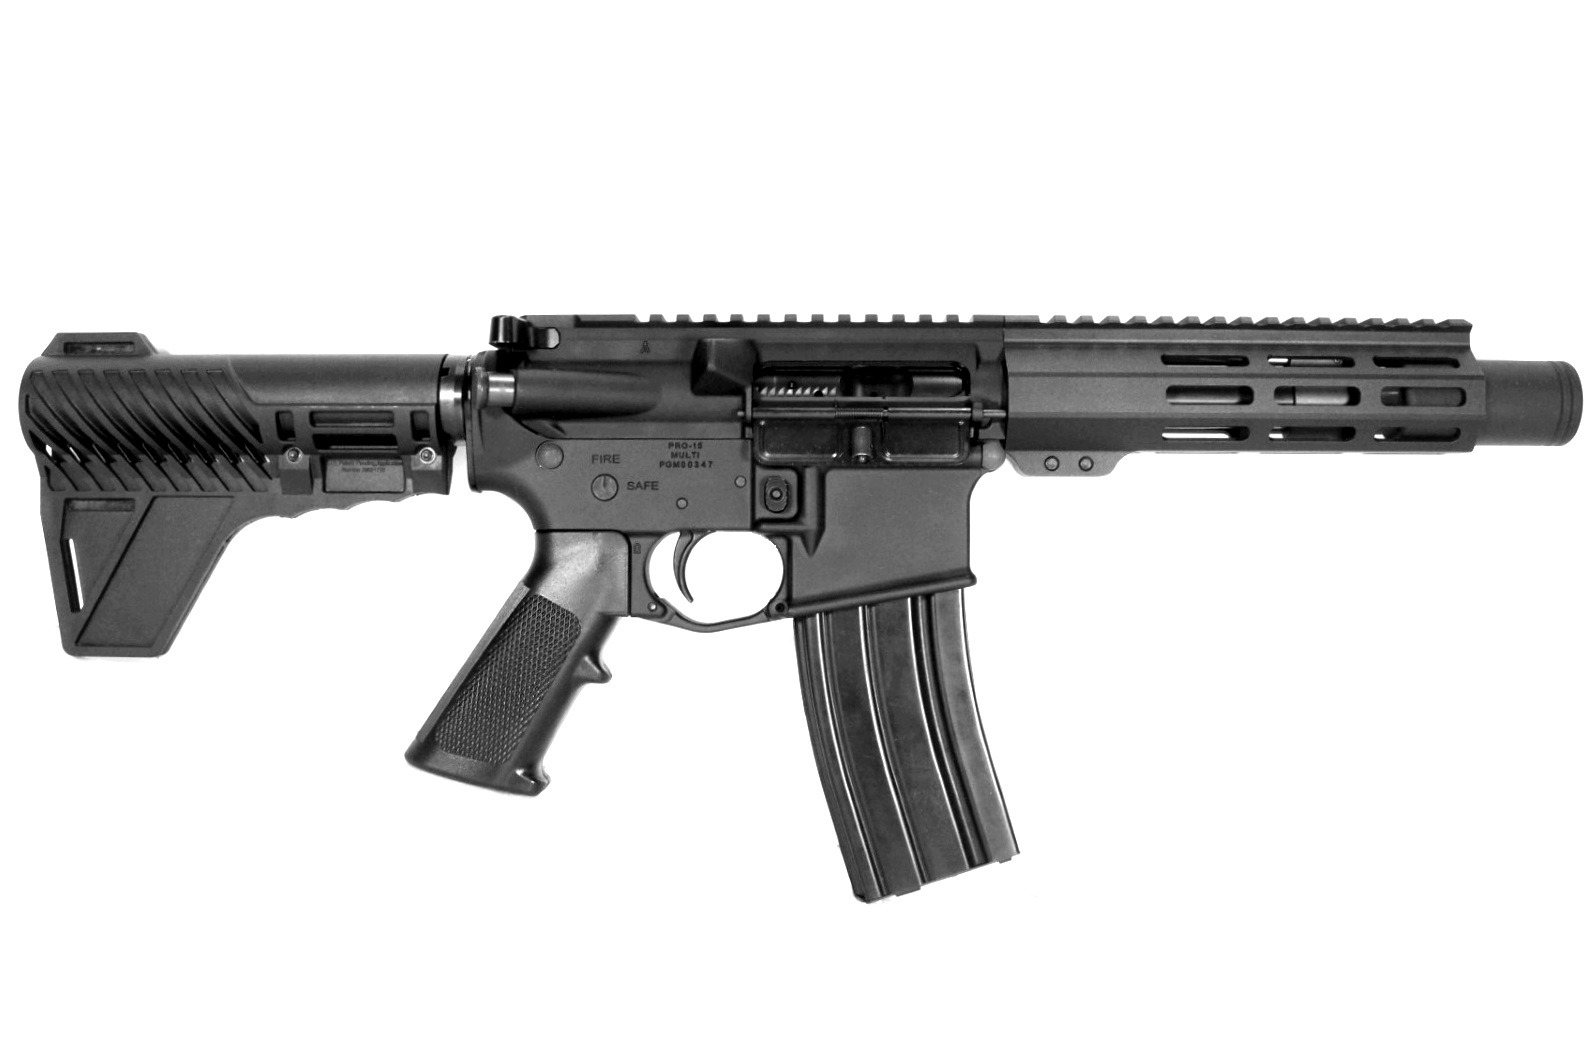 6 inch 300 Blackout AR-15 Pistol | Great Self Defense Weapon